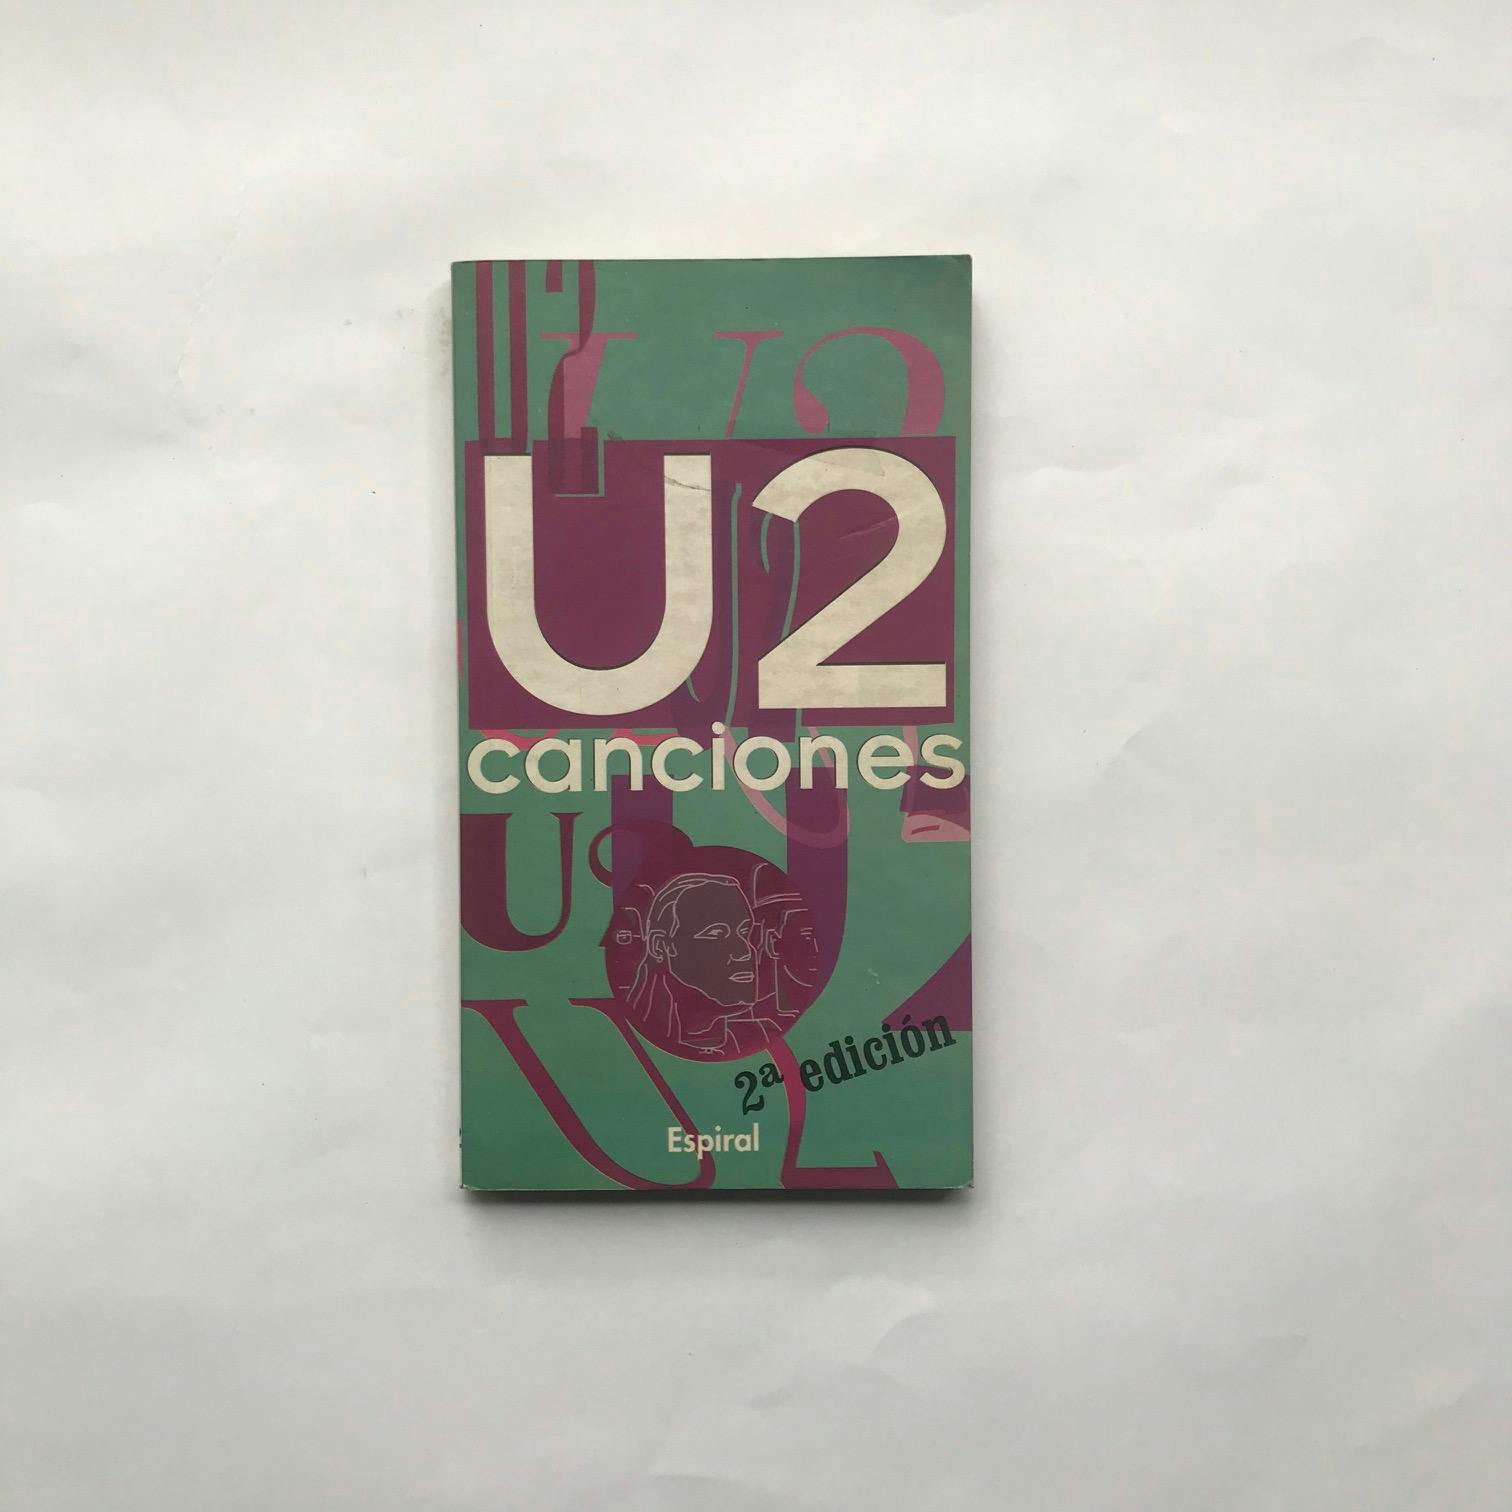 "U2 CANCIONES"